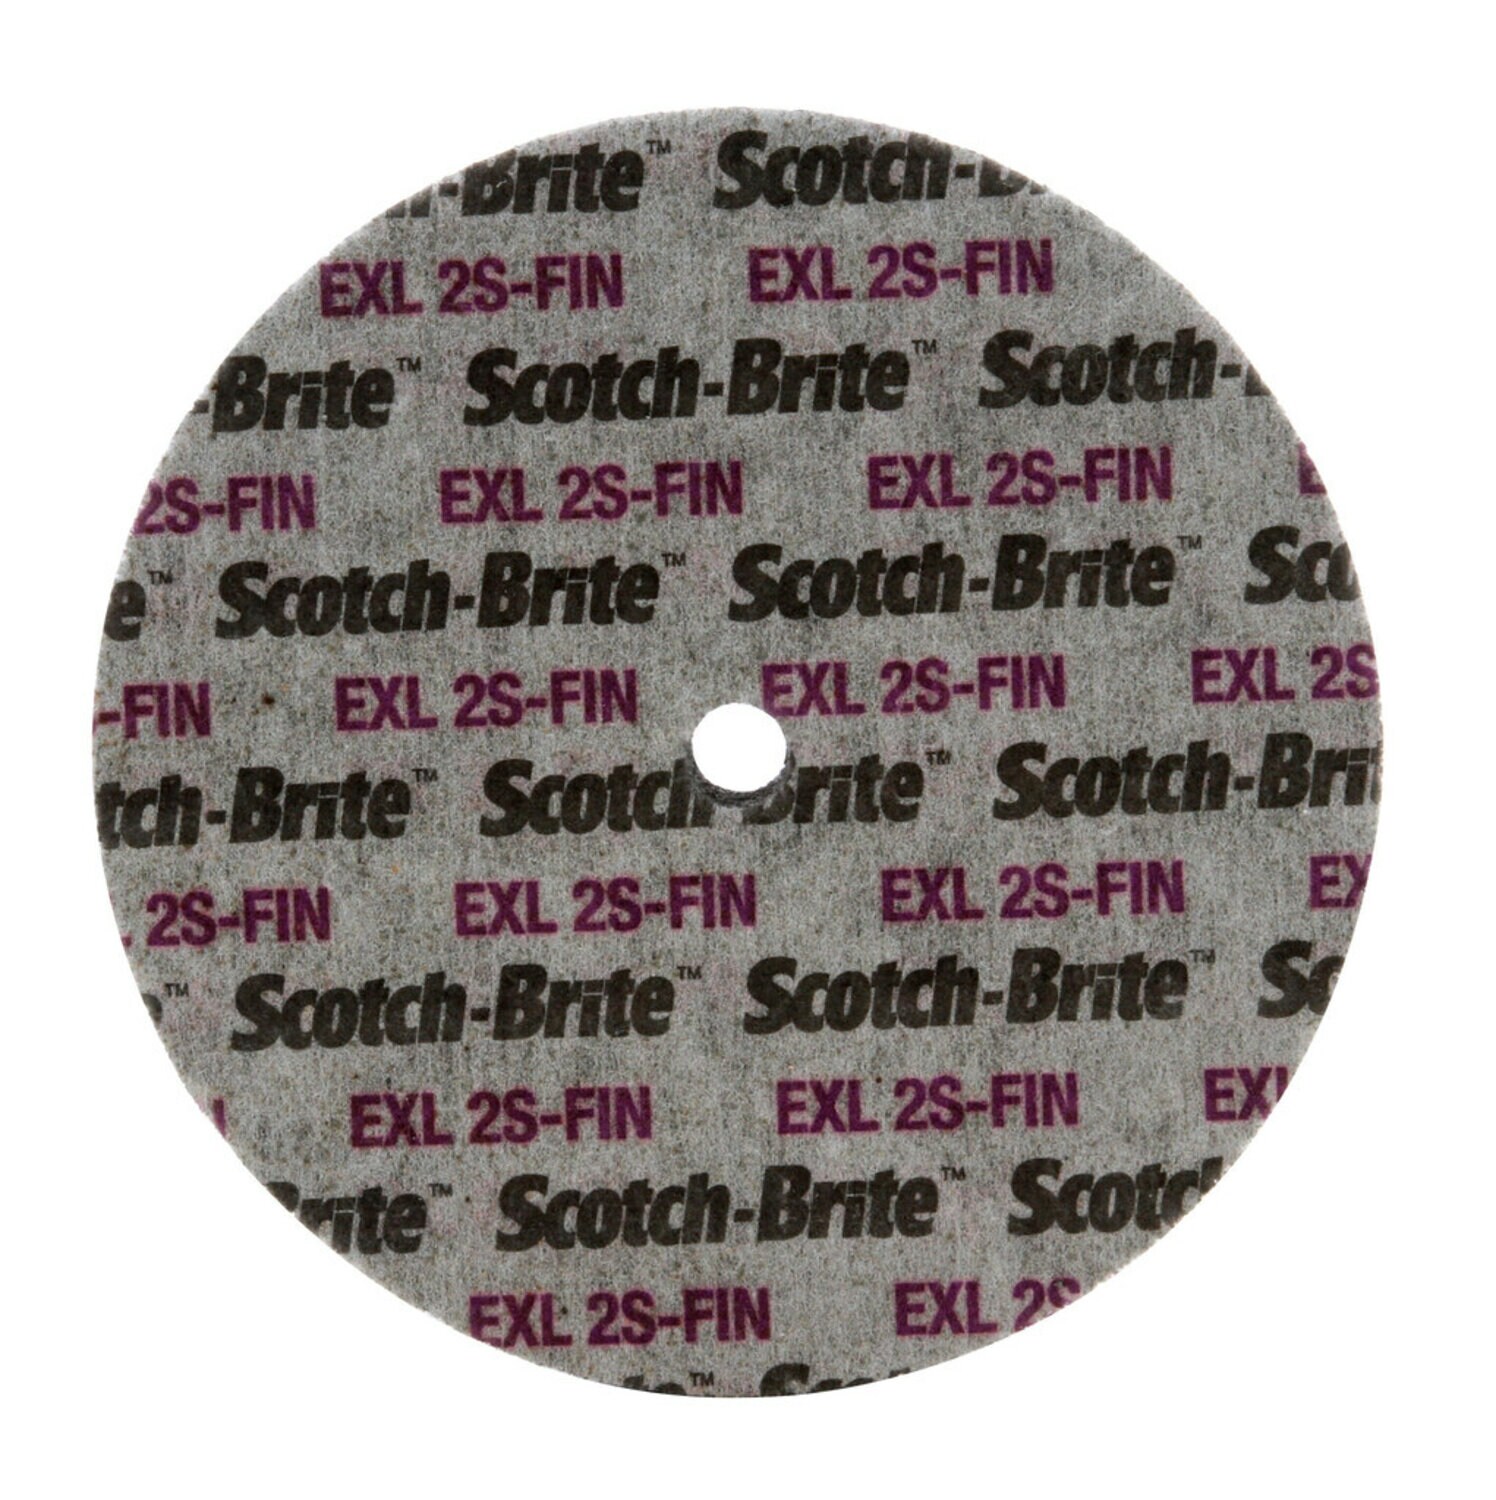 7000028479 - Scotch-Brite EXL Unitized Wheel, XL-UW, 2S Fine, 6 in x 1 in x 1 in, 2
ea/Case